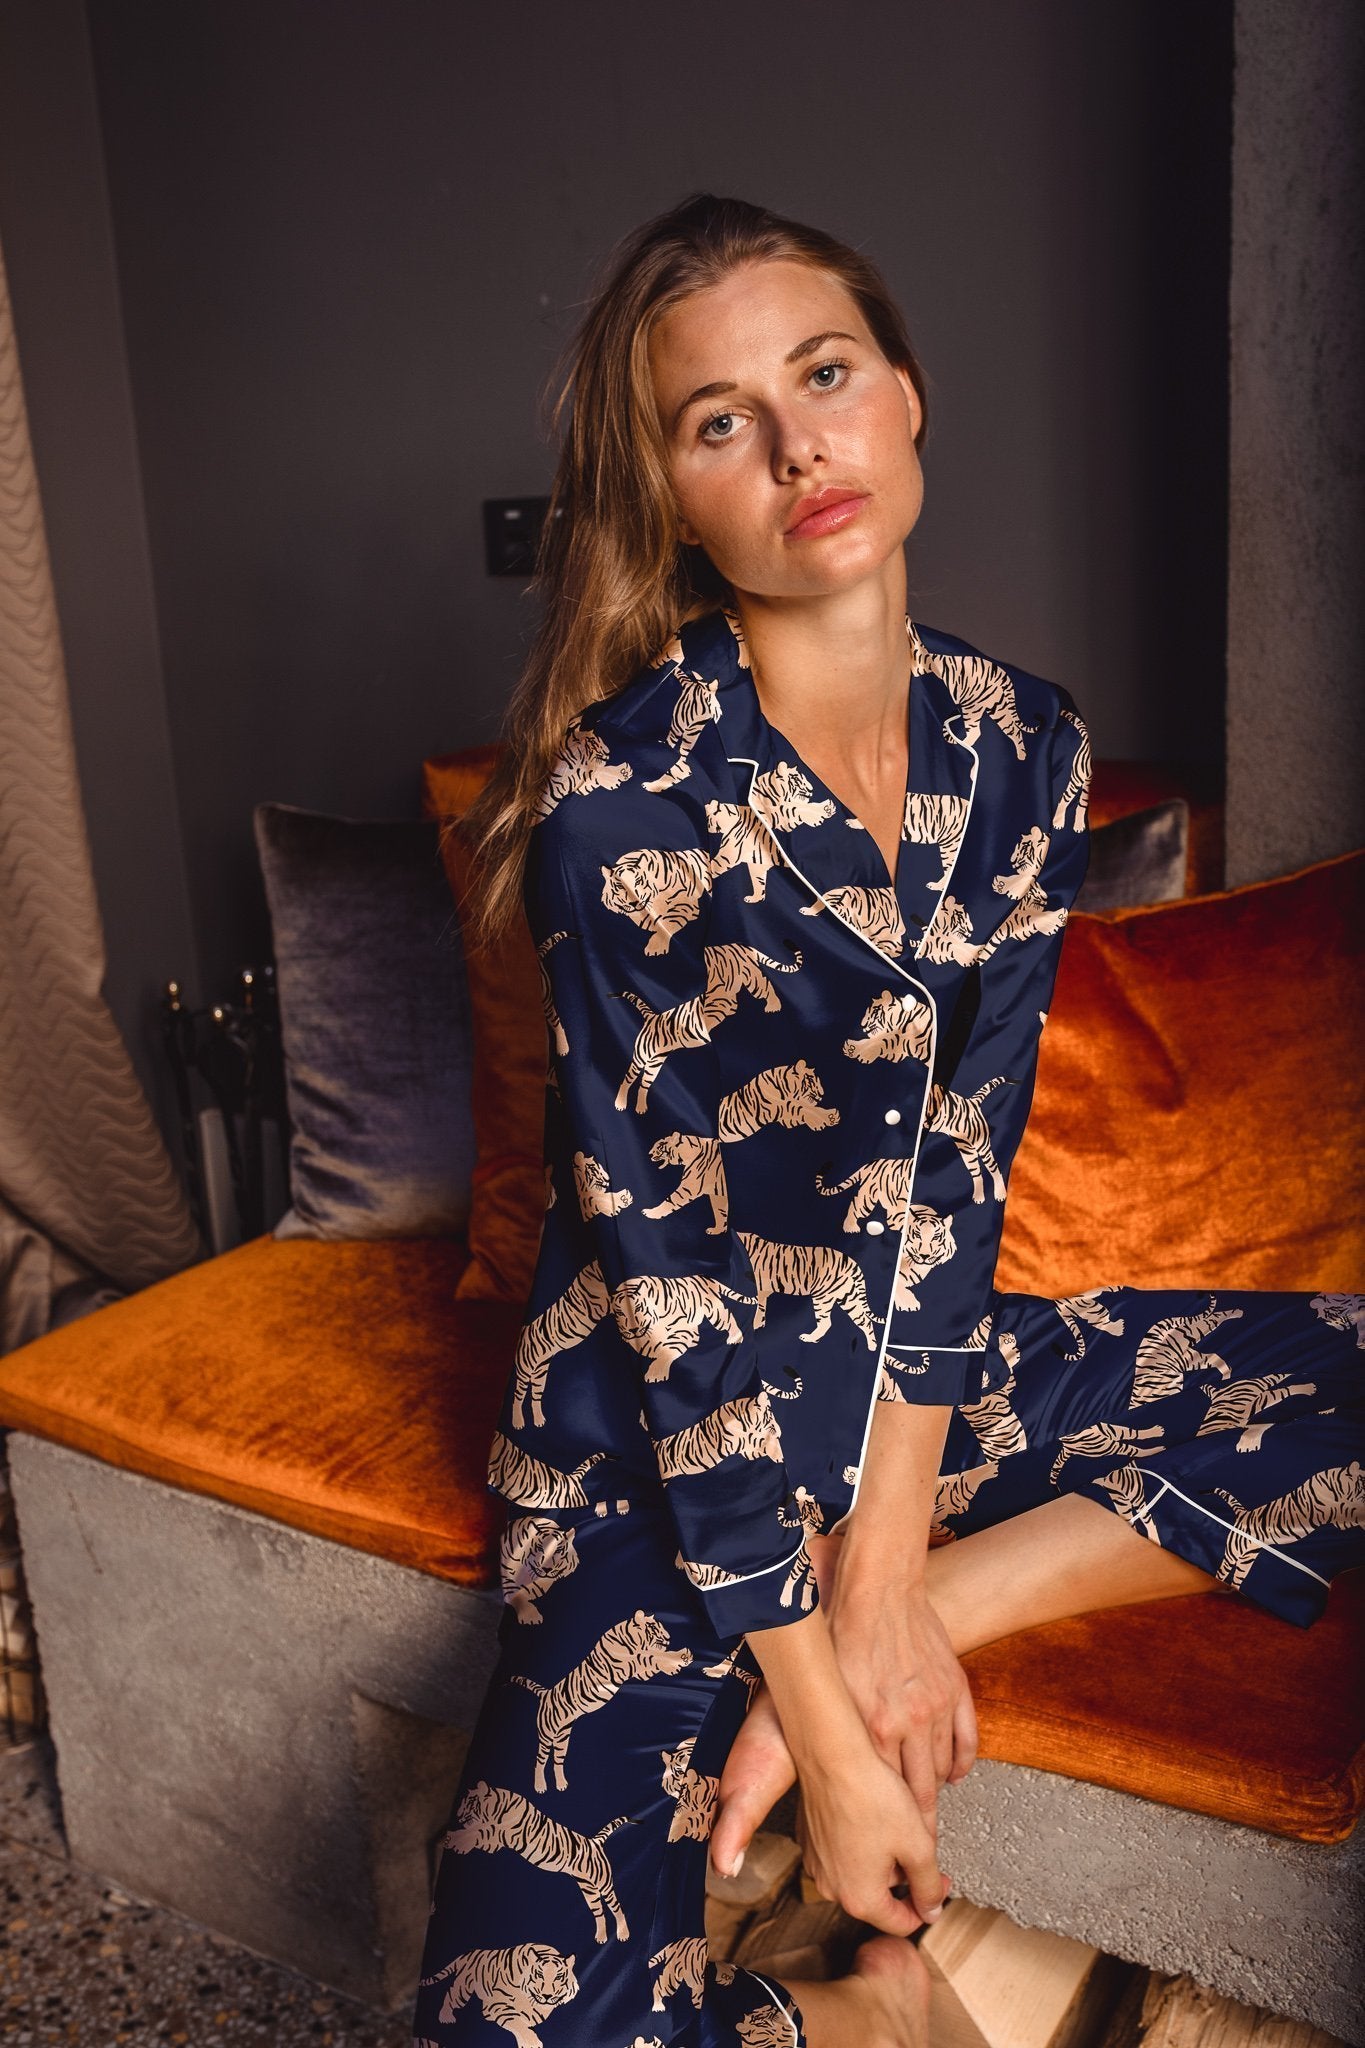 AherBiu 2 Piece Pajamas Sets for Women Satin Long Sleeve Shirts